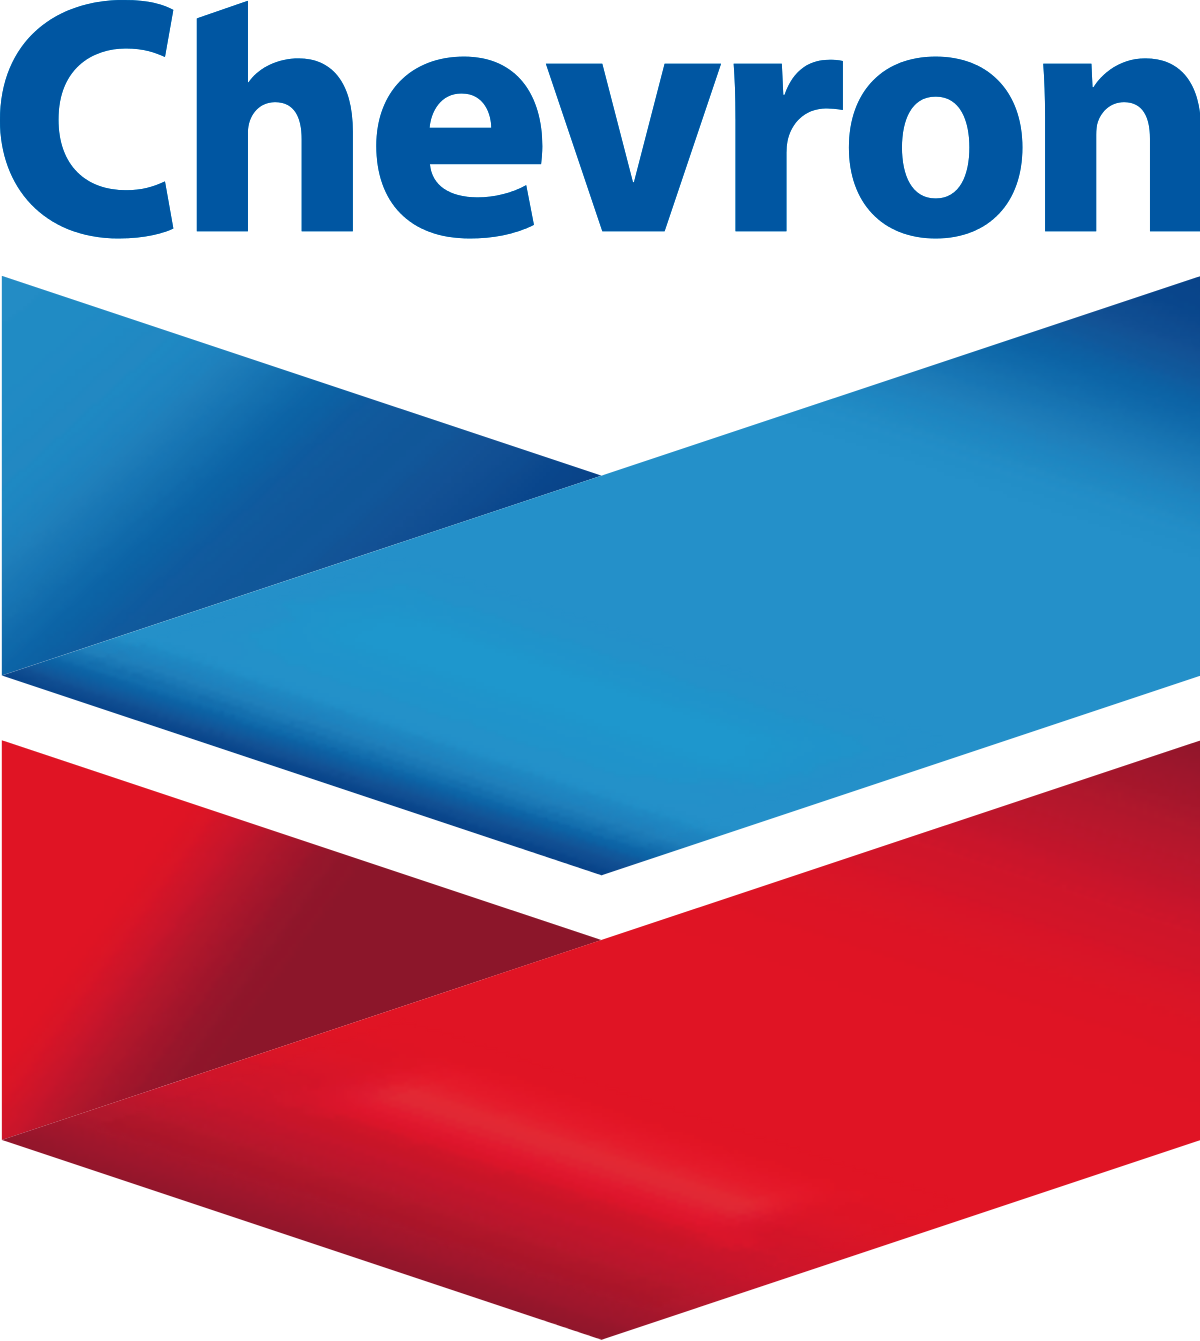 Chevron explains why it quarantined staff